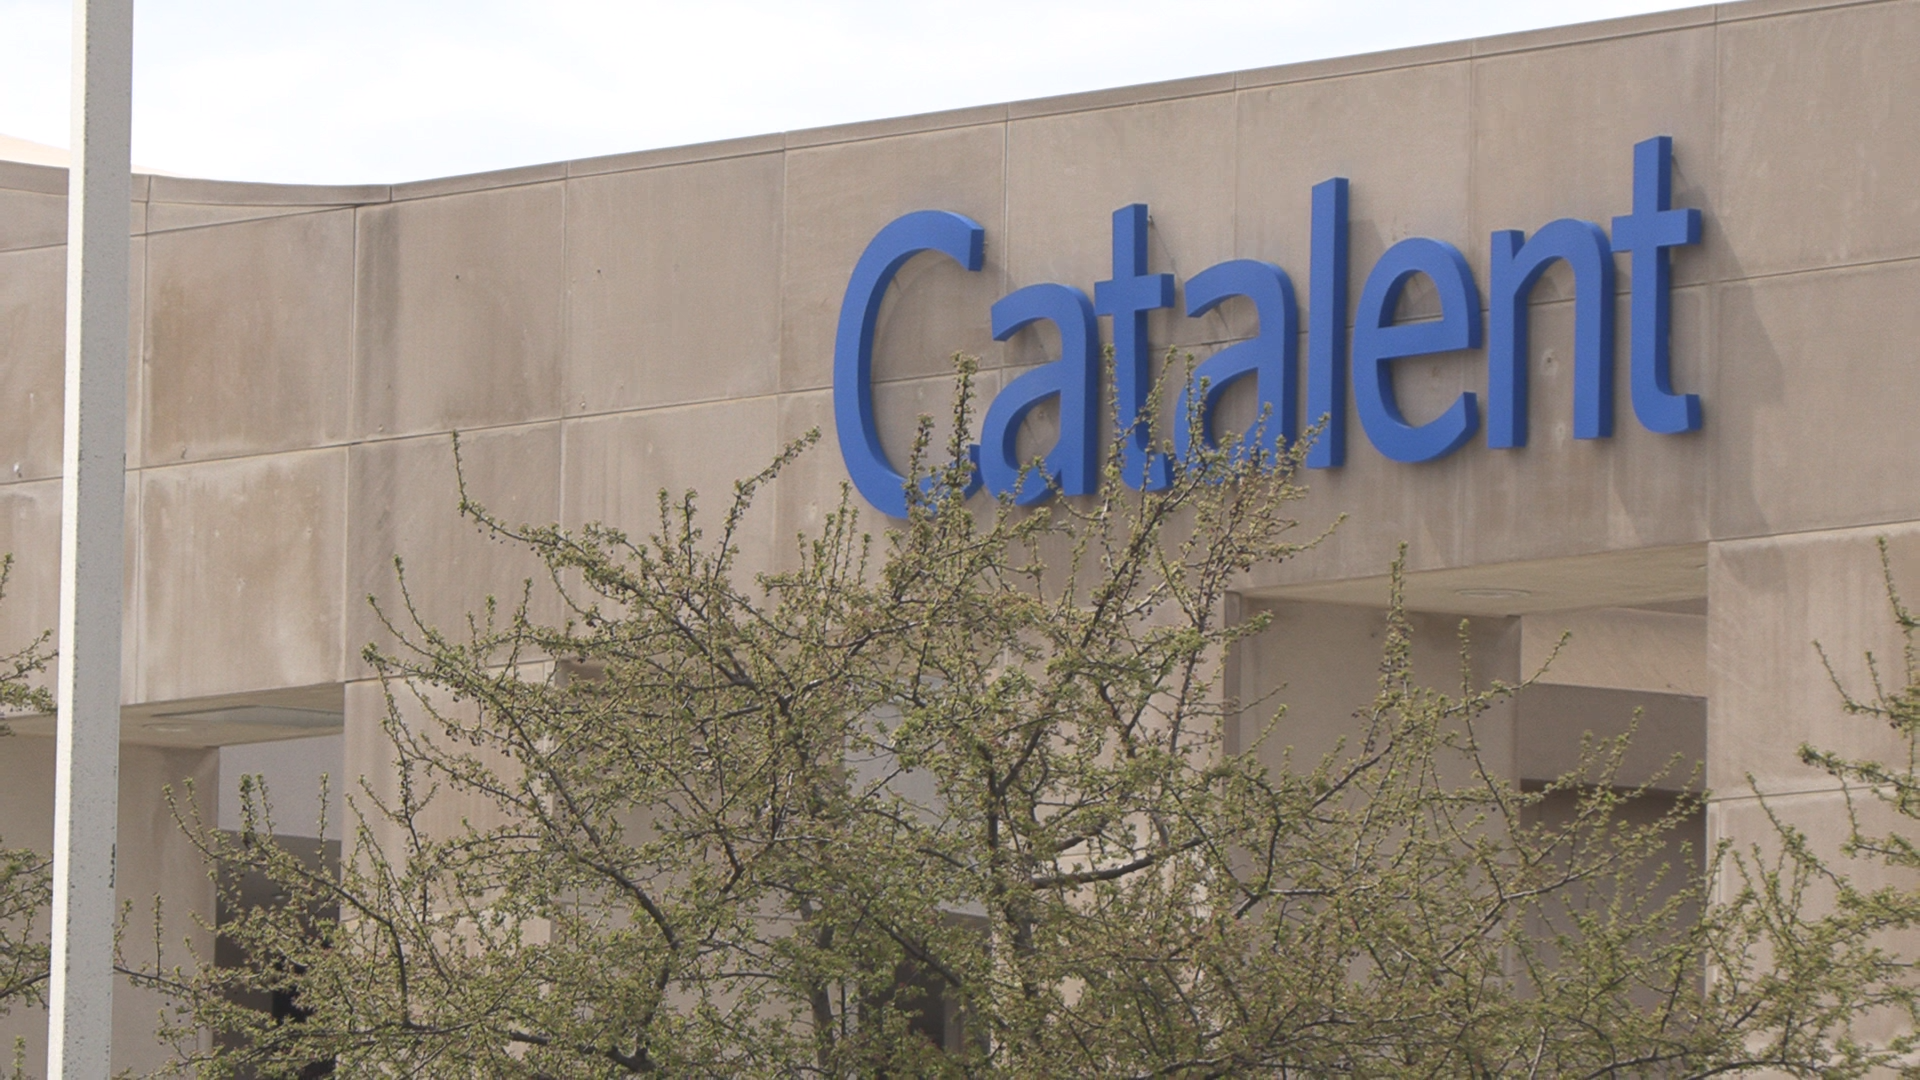 Catalent cuts more than 100 jobs at Bloomington facility